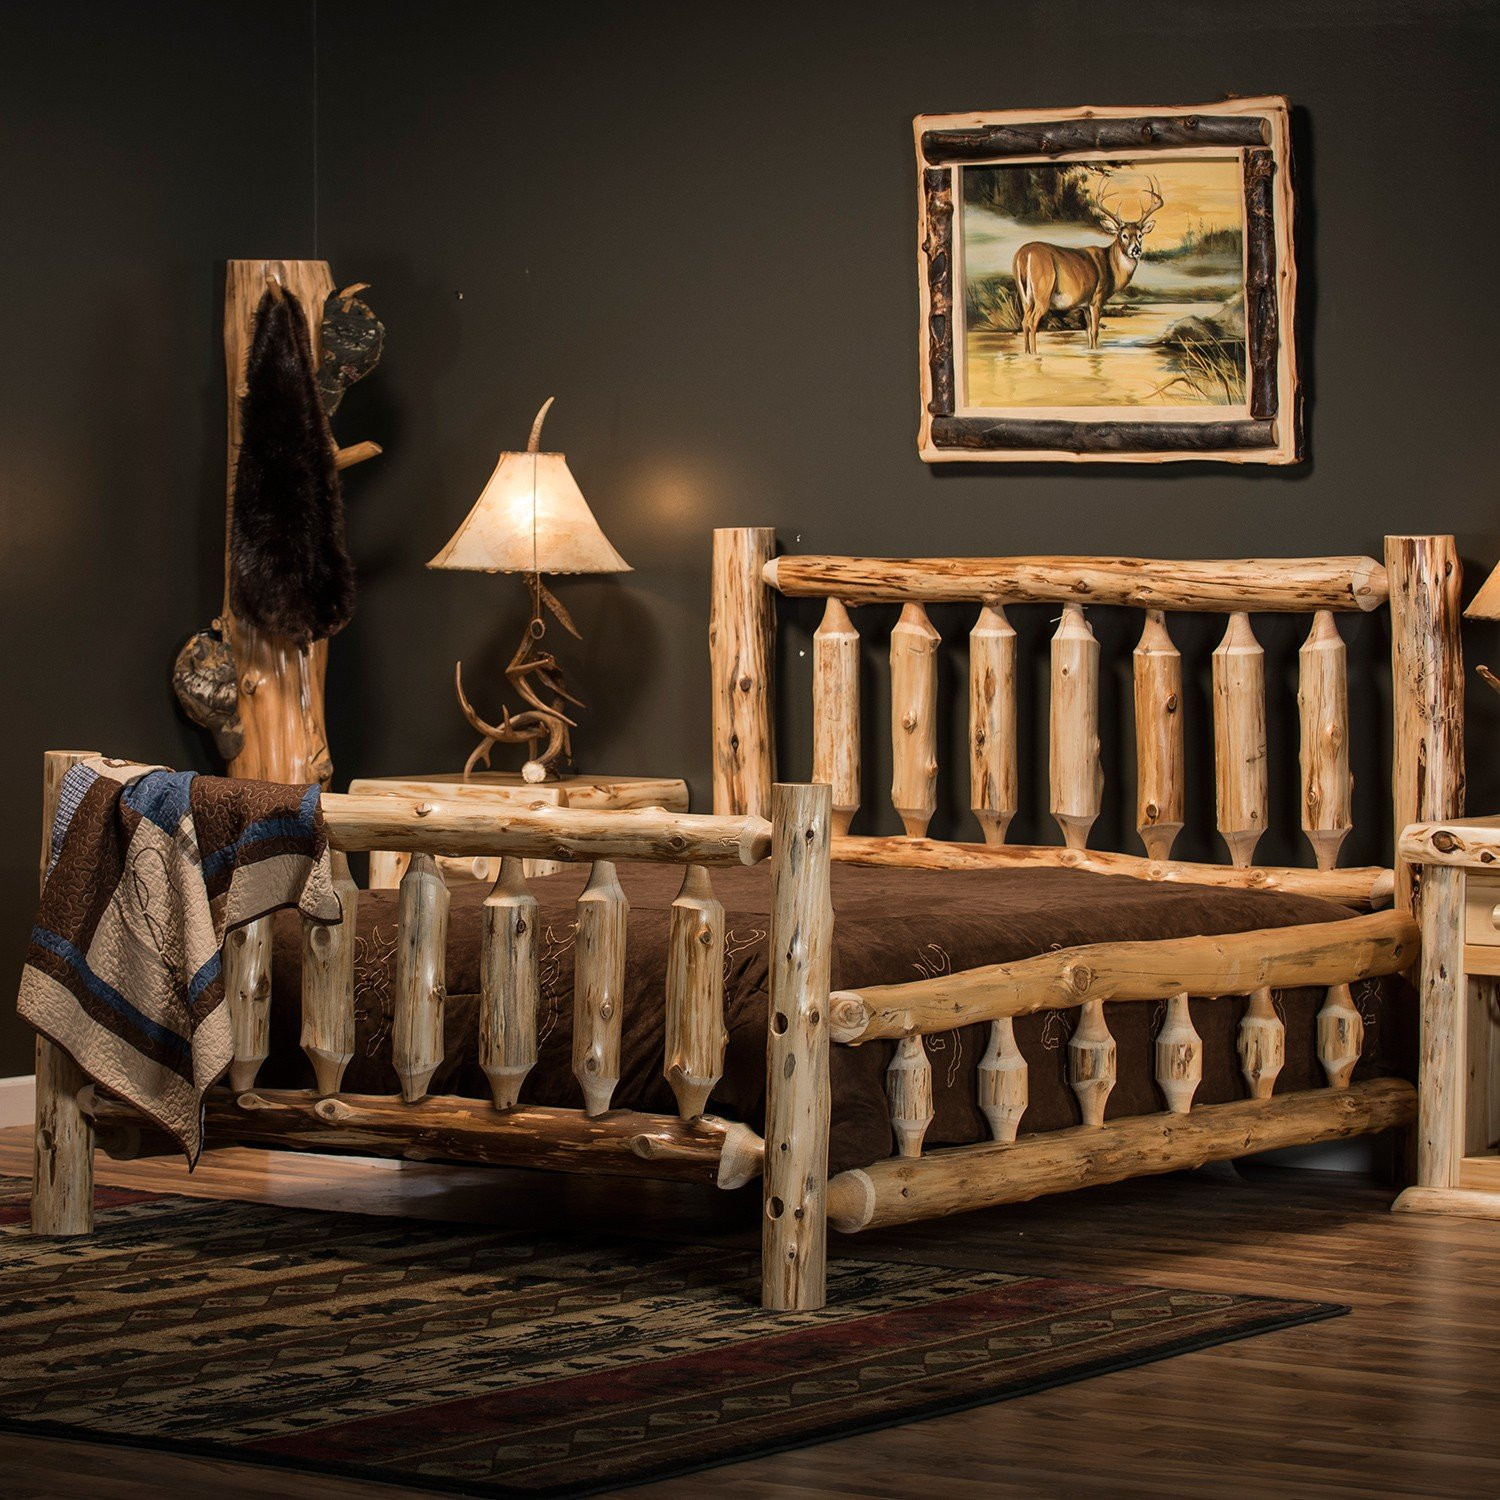 Rustic Log Bedroom Furniture
 Rustic Cedar Log Bed